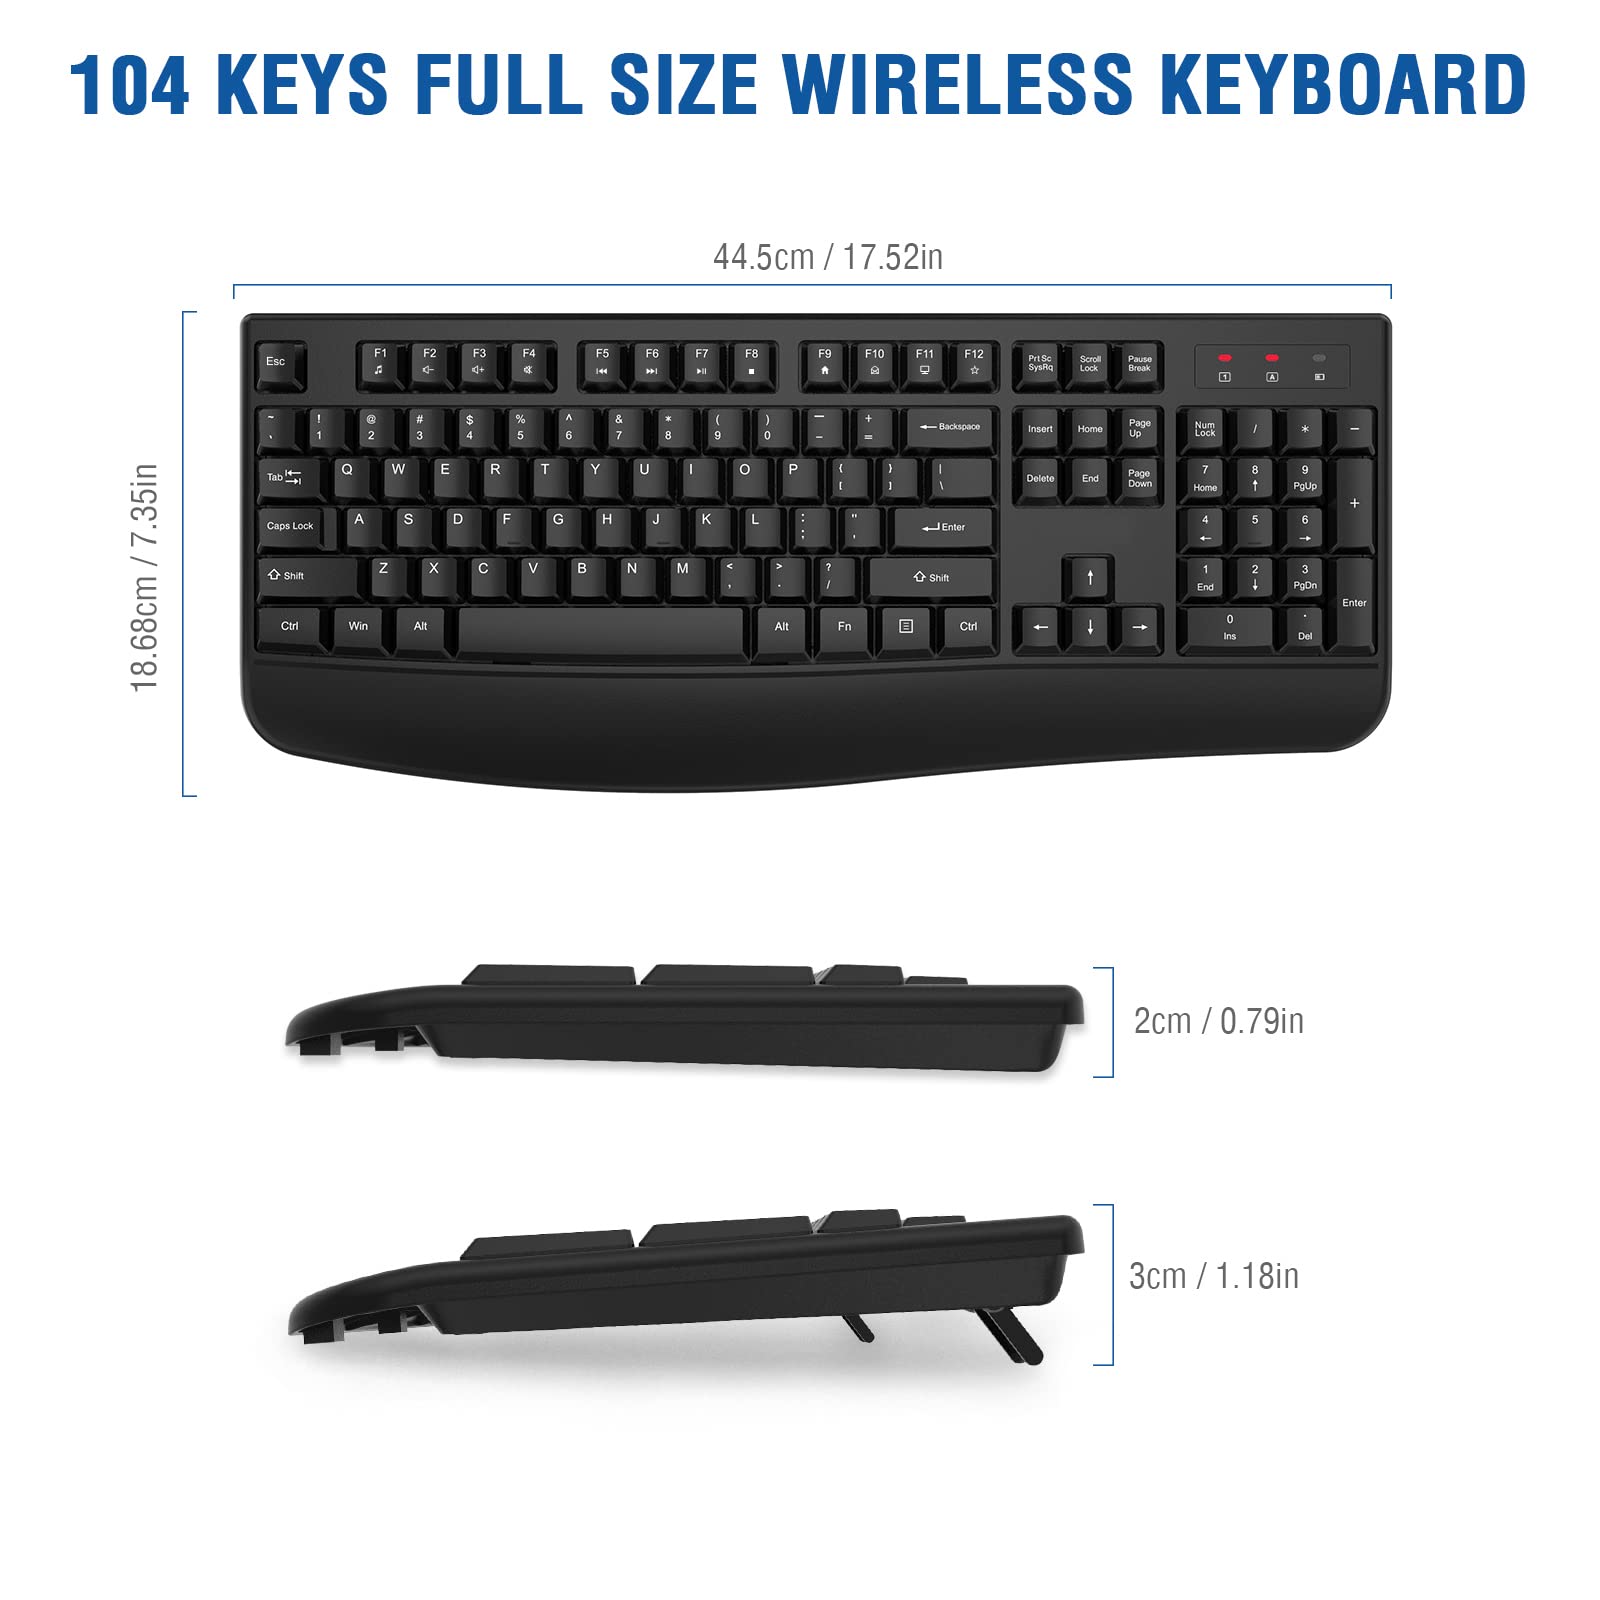 EDJO Wireless Keyboard, 2.4G Ergonomic Full Size Wireless Computer Keyboard with Wrist Rest for Windows, Mac OS Desktop/Laptop/PC（Black）